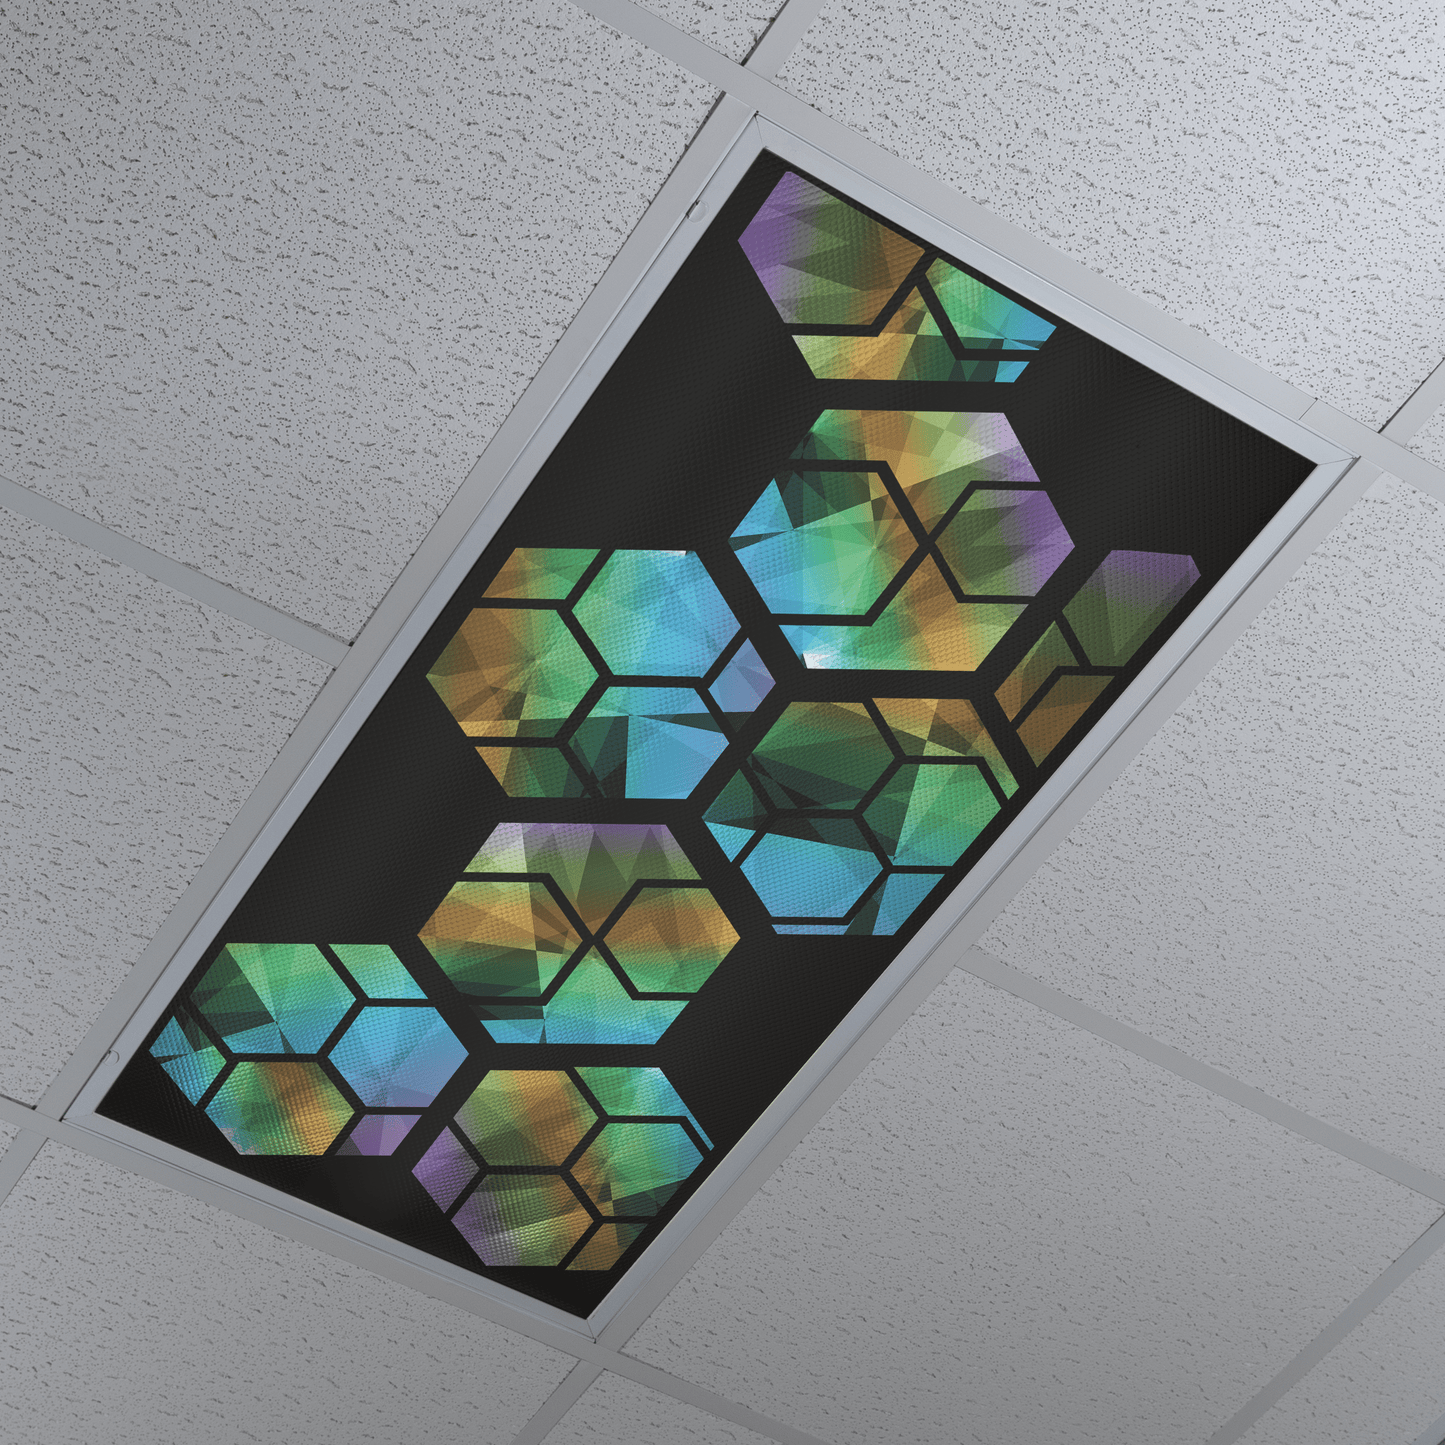 DesignScape - 2'x4' Hexagonal Stained Glass - Apollo Design Made